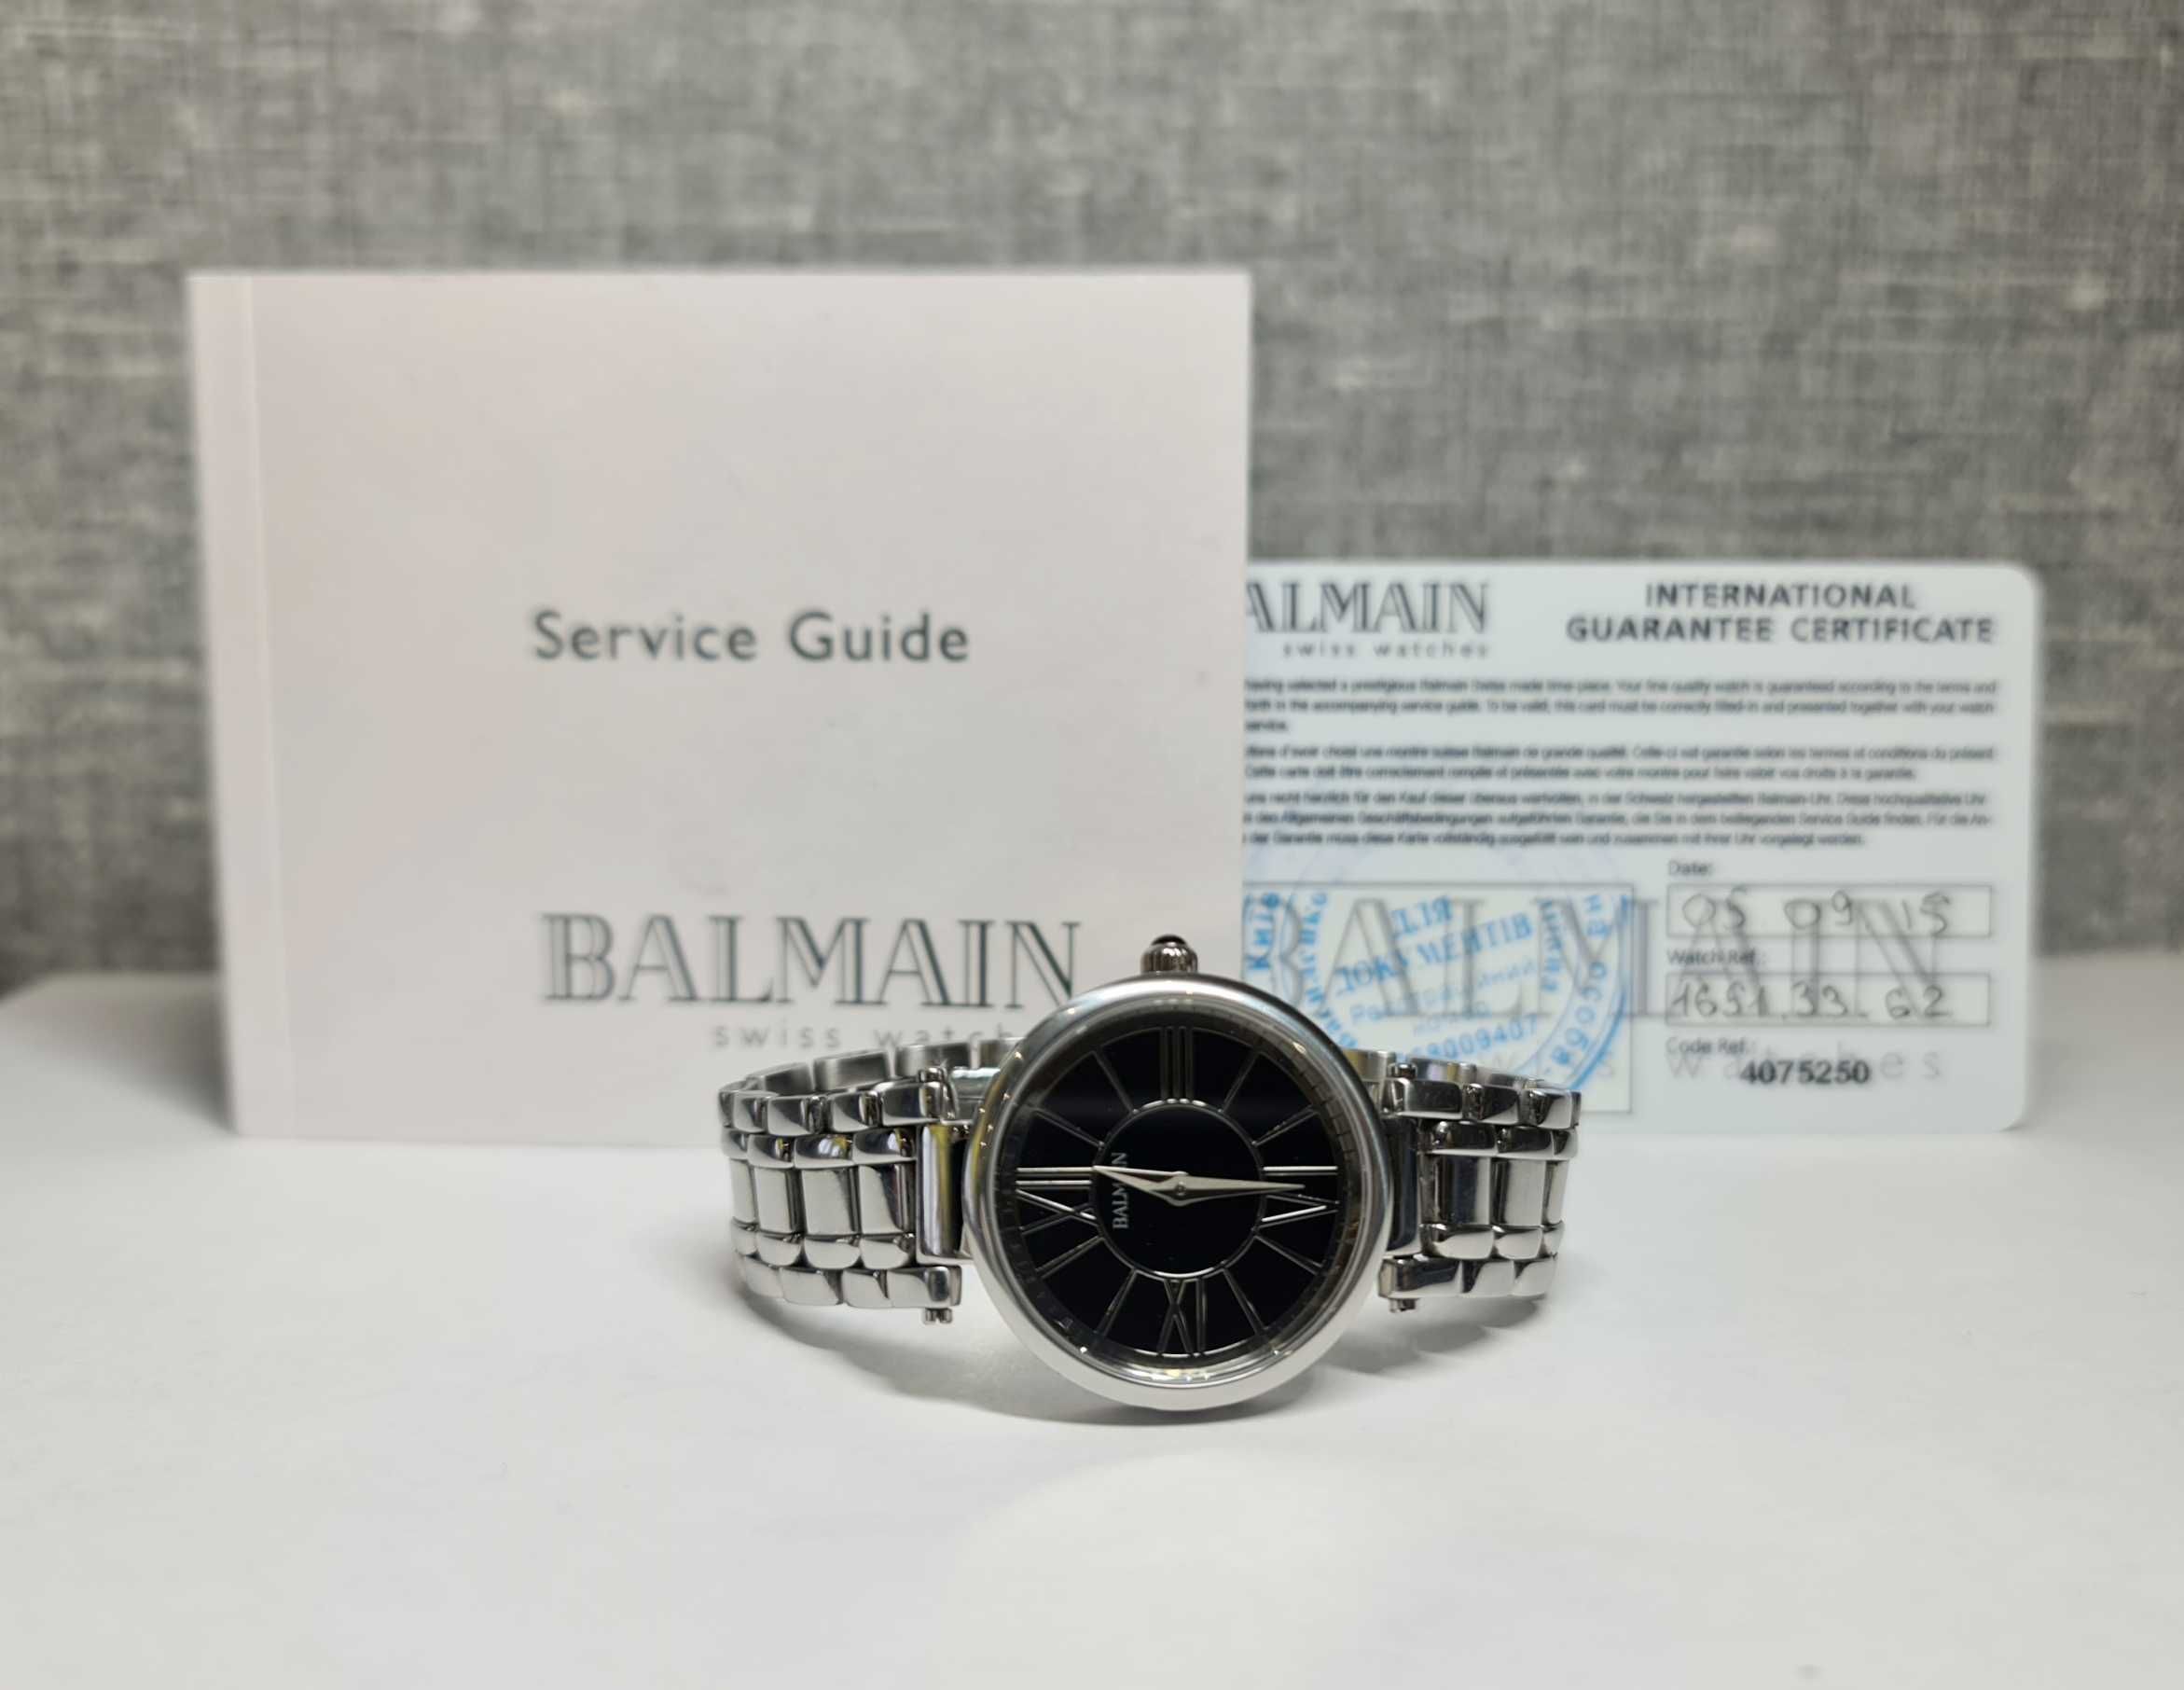 Жіночий годинник часы Balmain B1651.33.62 Swiss made